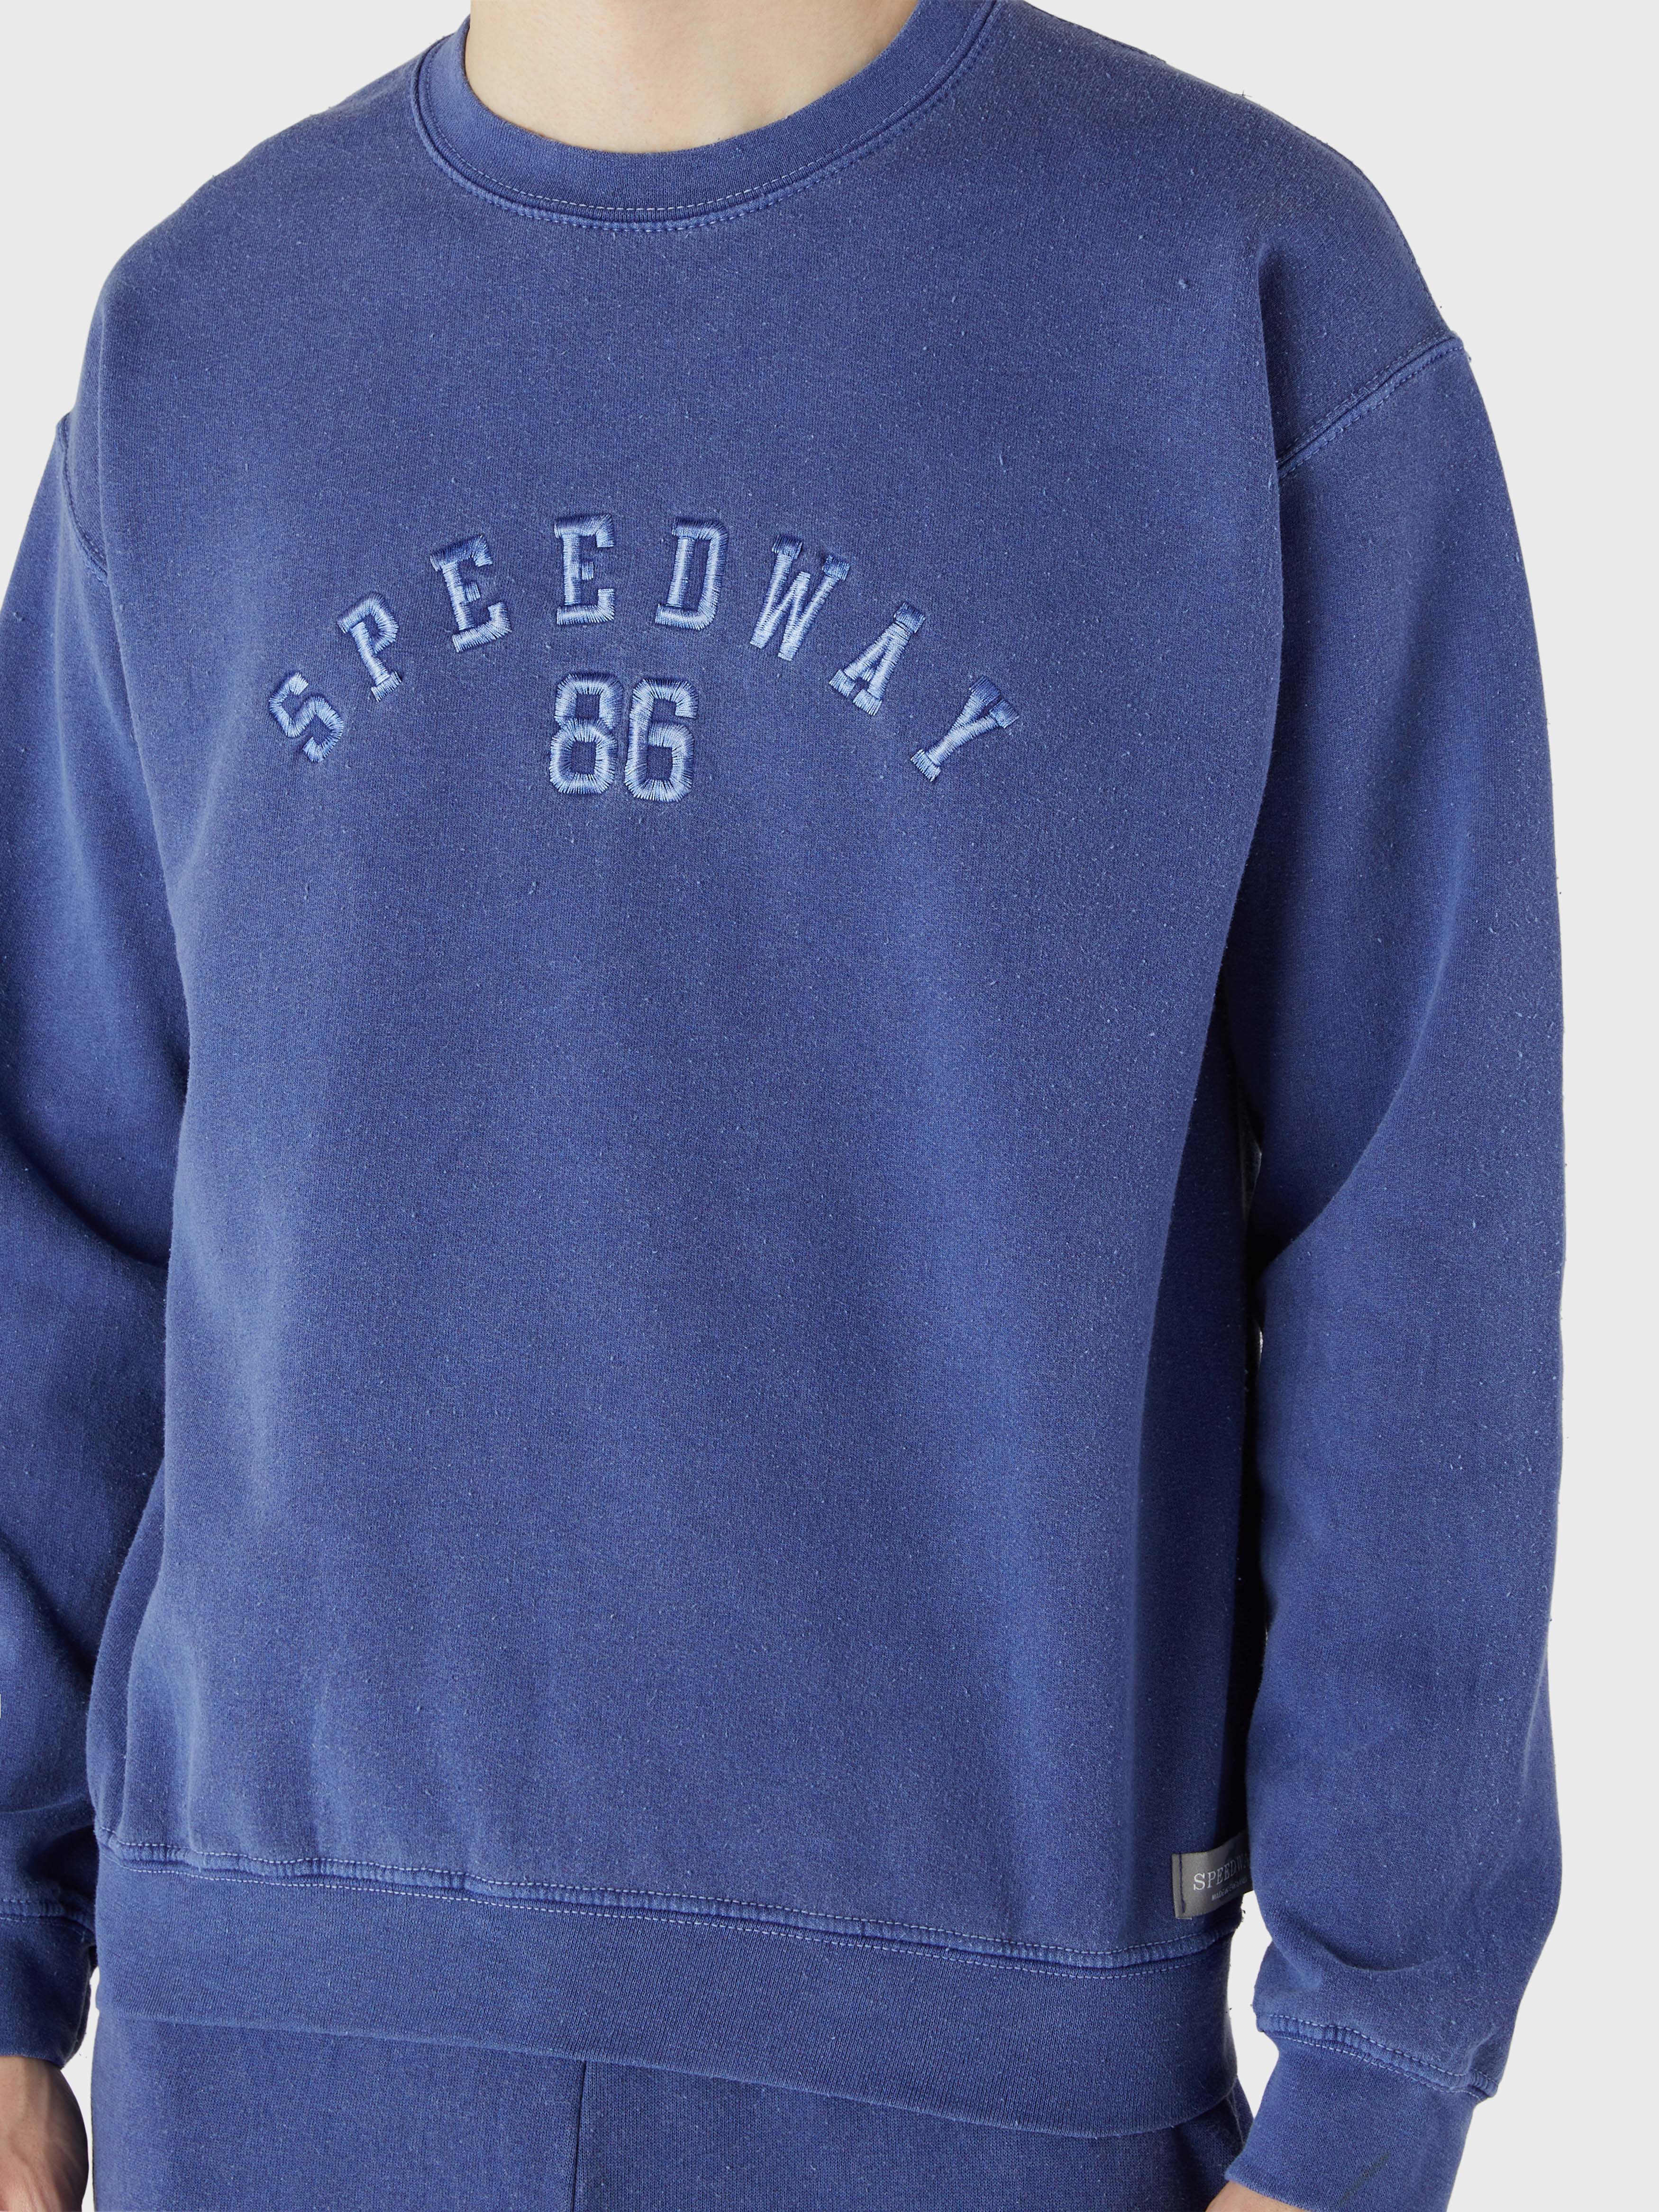 Speedway 86 Classic Sweatshirt - Navy Wash